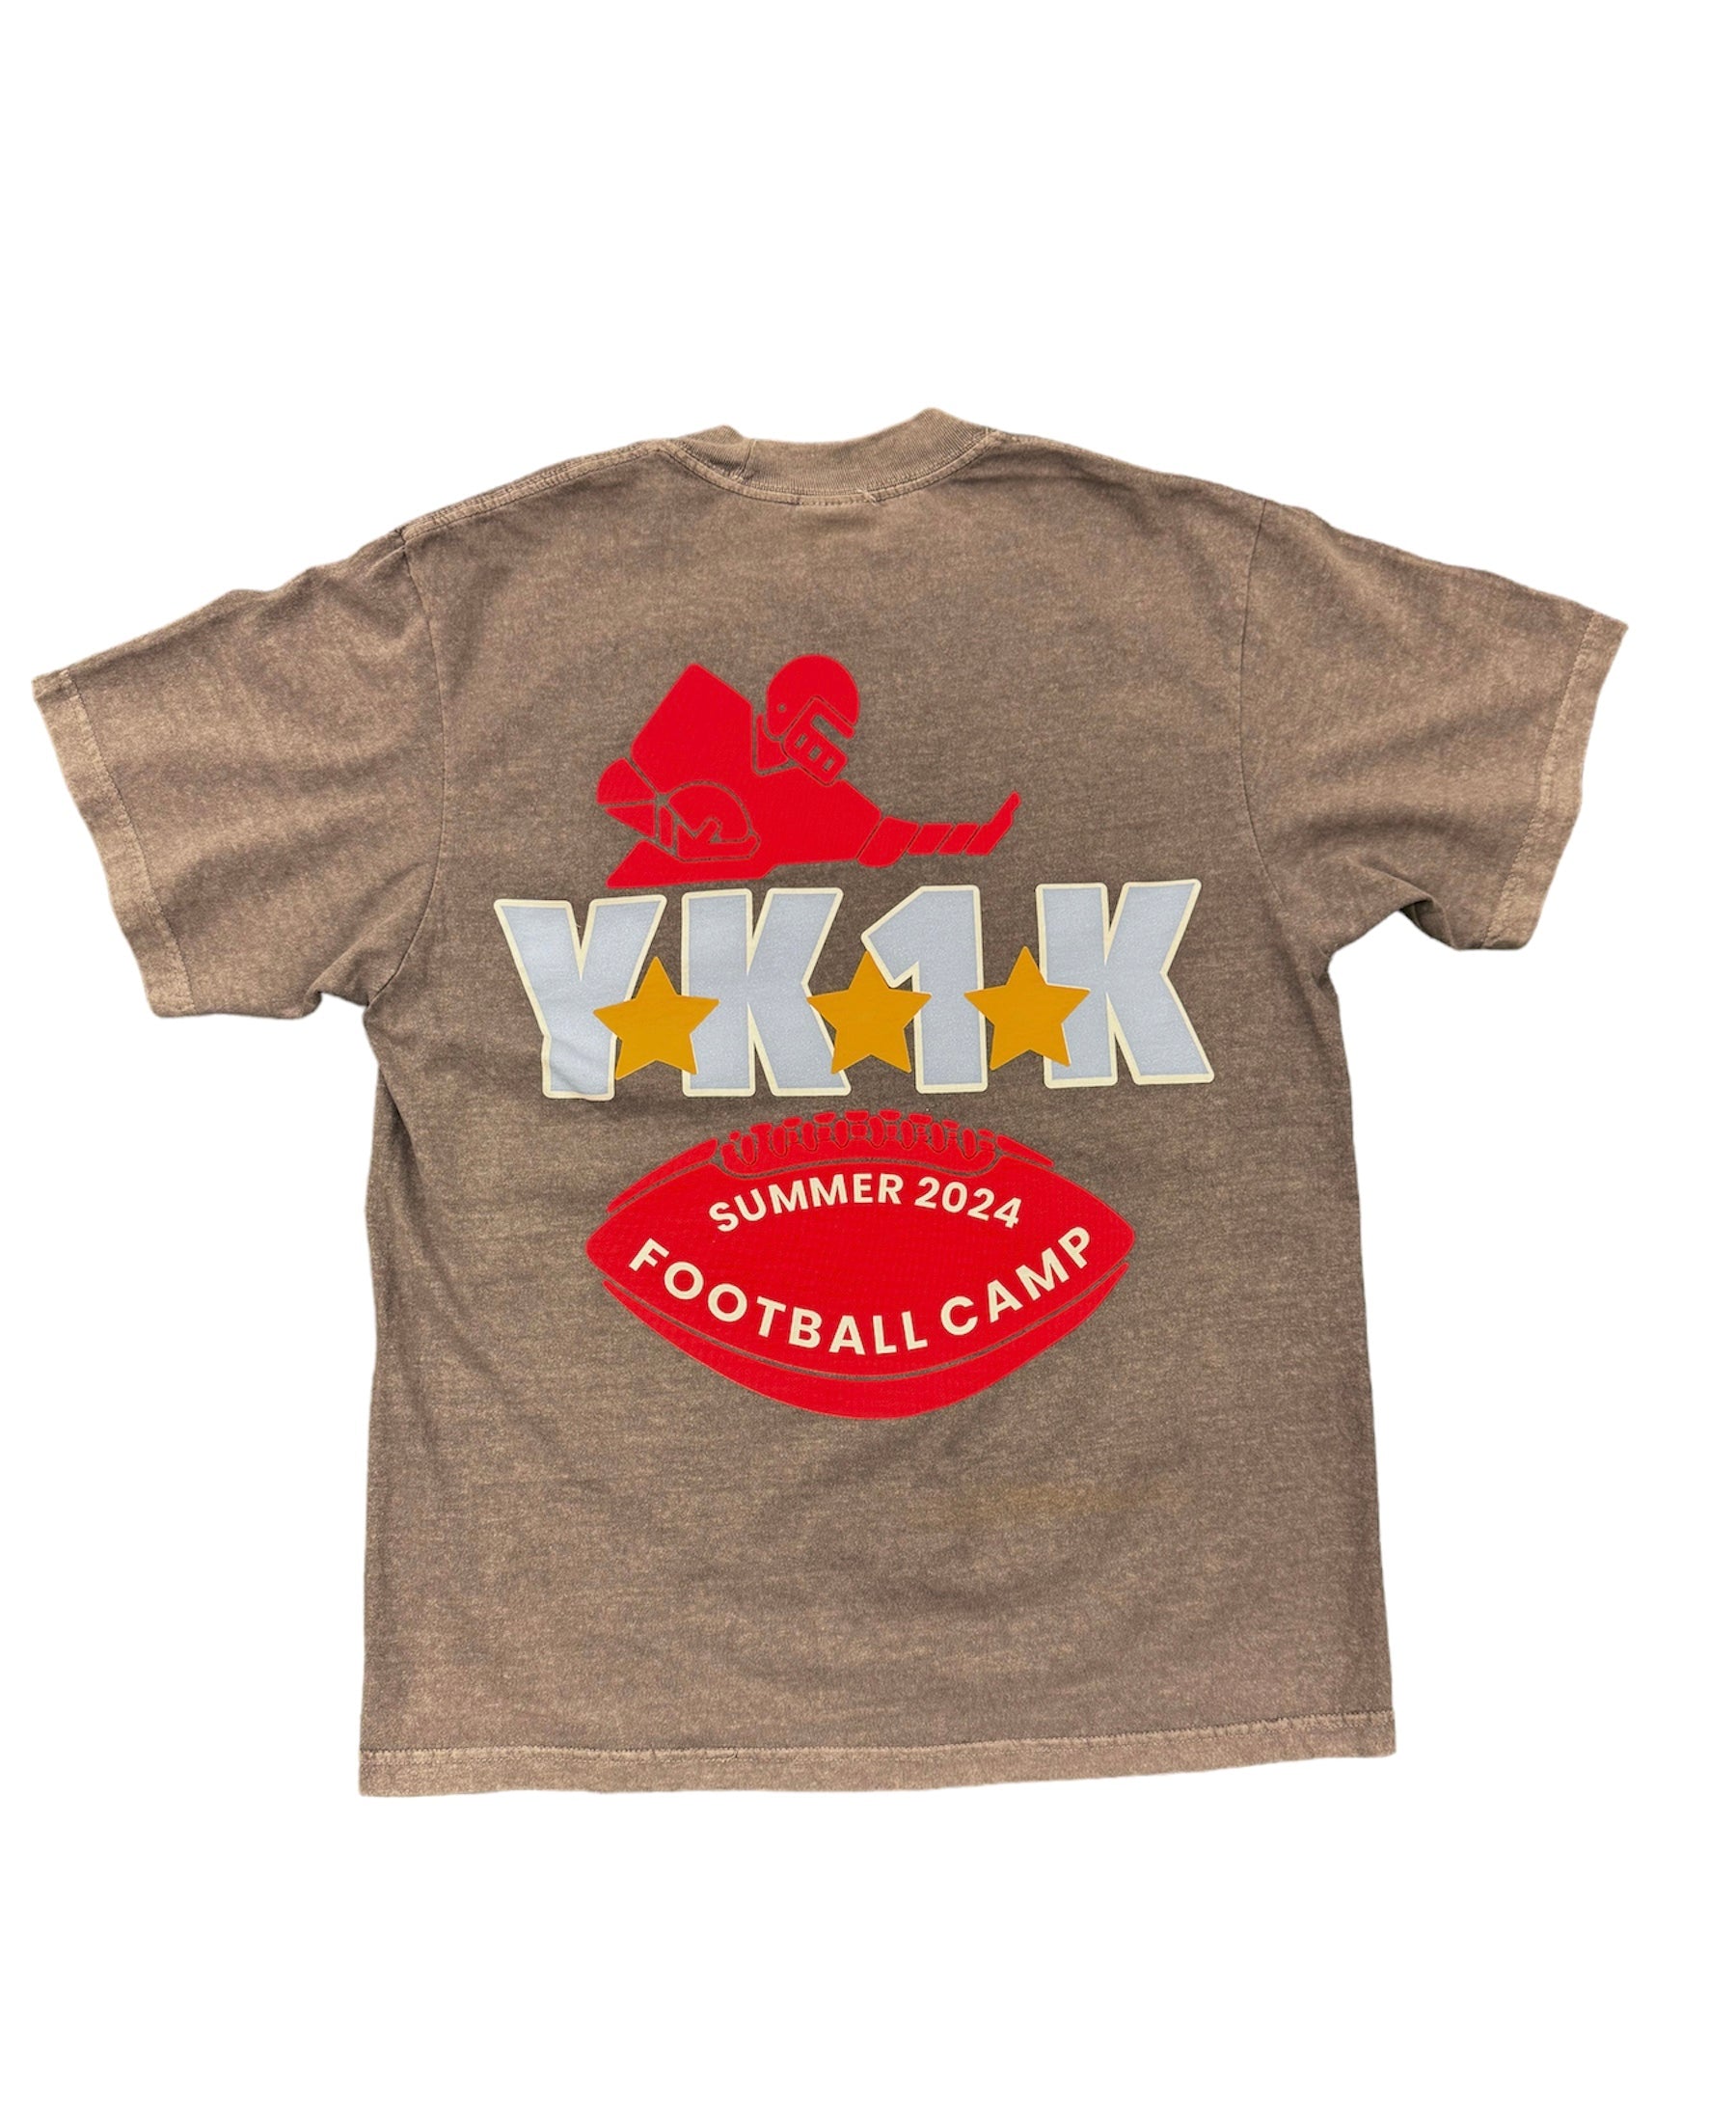 YK1K Football Camp Grey